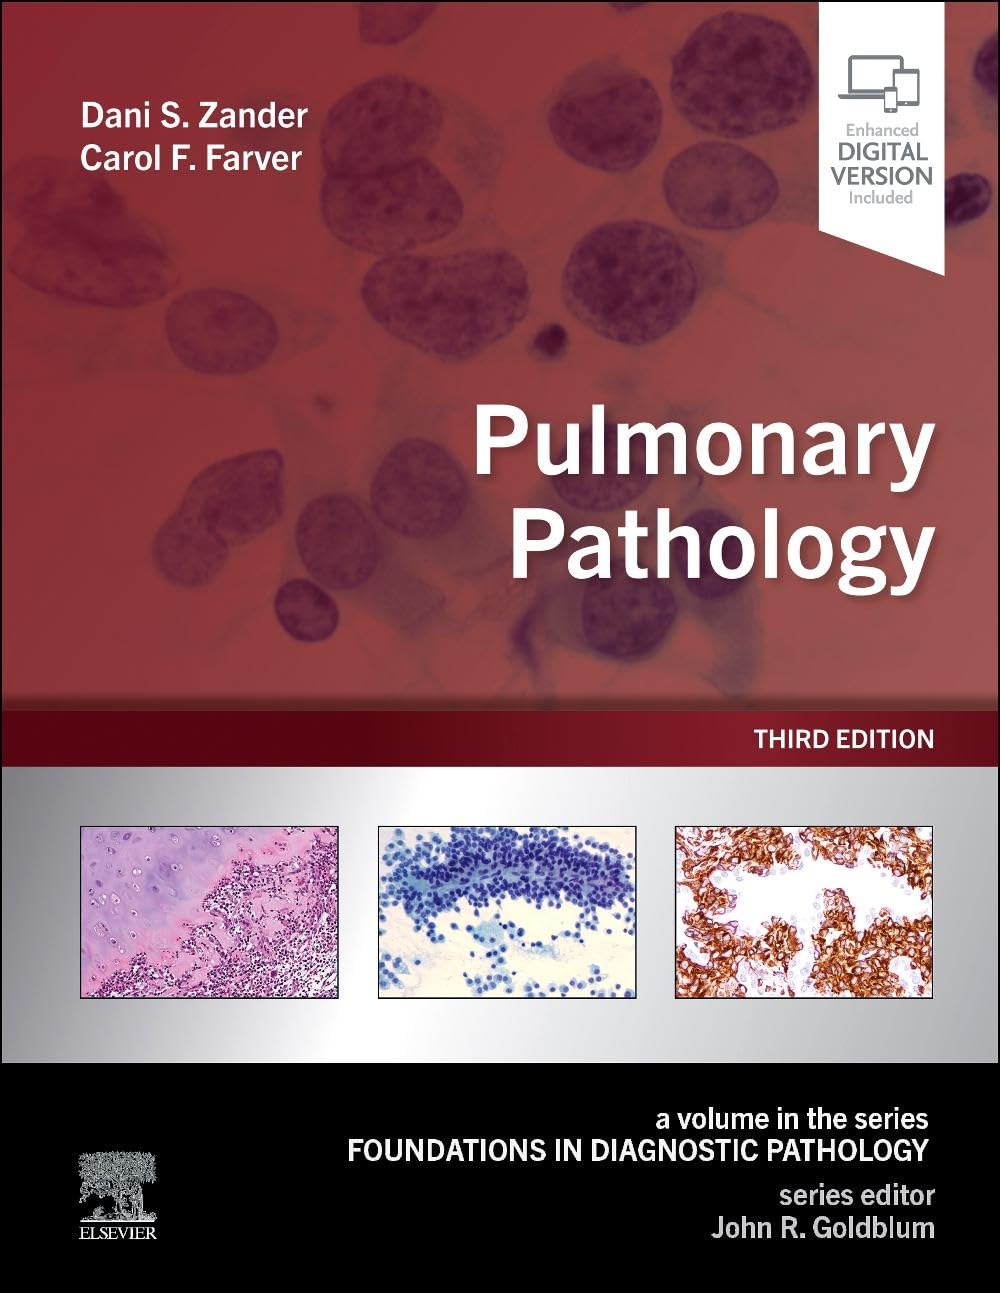 (EBook PDF)Pulmonary Pathology (Foundations in Diagnostic Pathology), 3rd edition by Dani S. Zander MD, Carol F. Farver MD, John R. Goldblum MD FCAP FASCP FACG